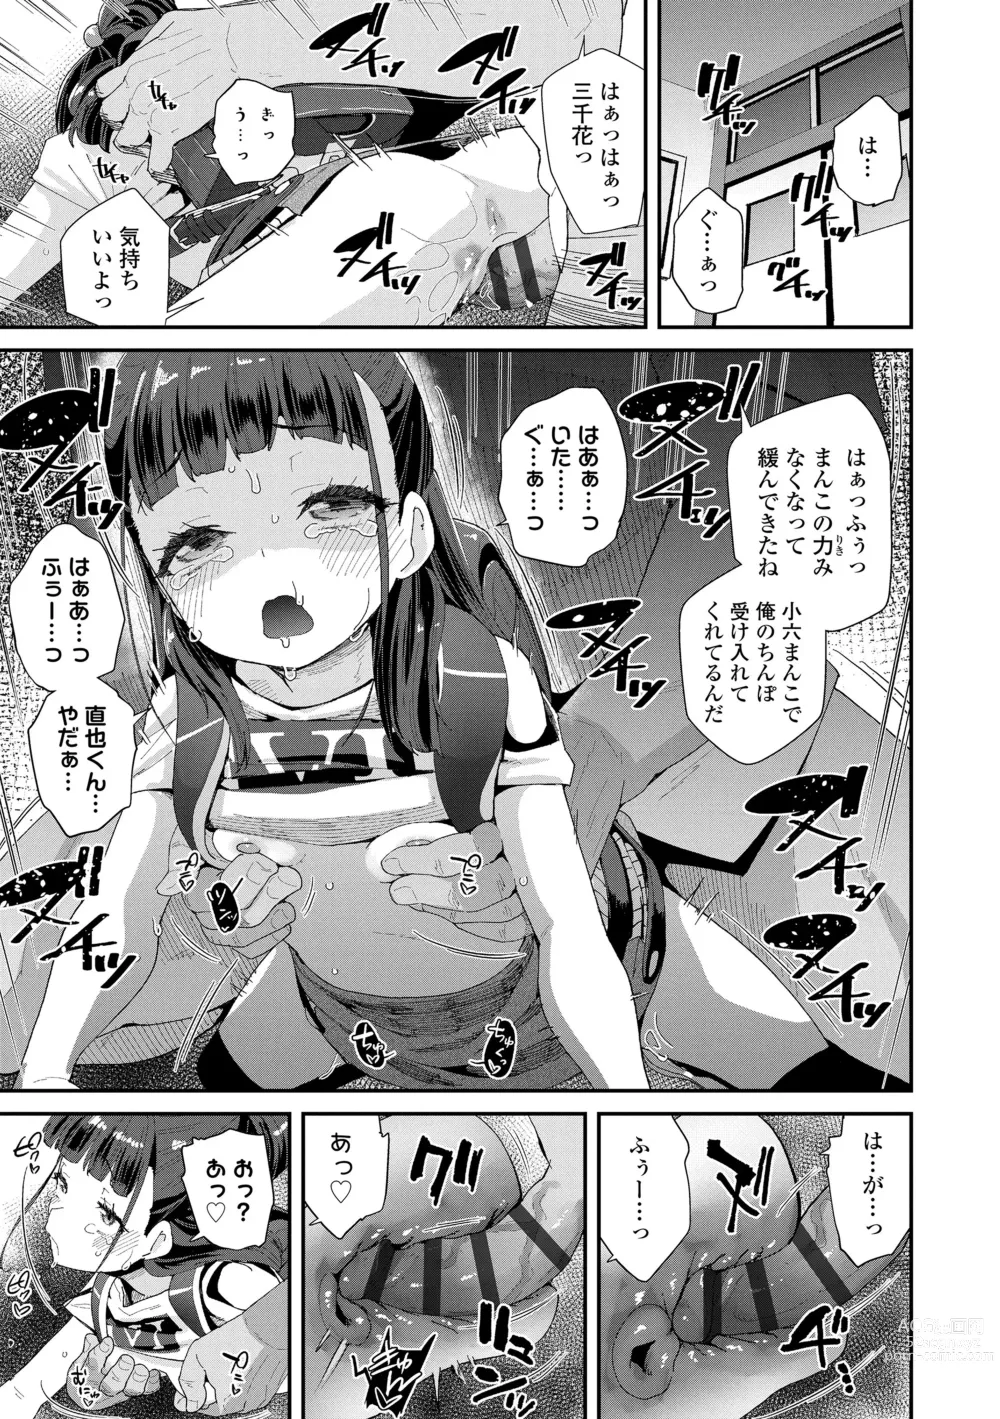 Page 185 of manga Mitsu to Chou